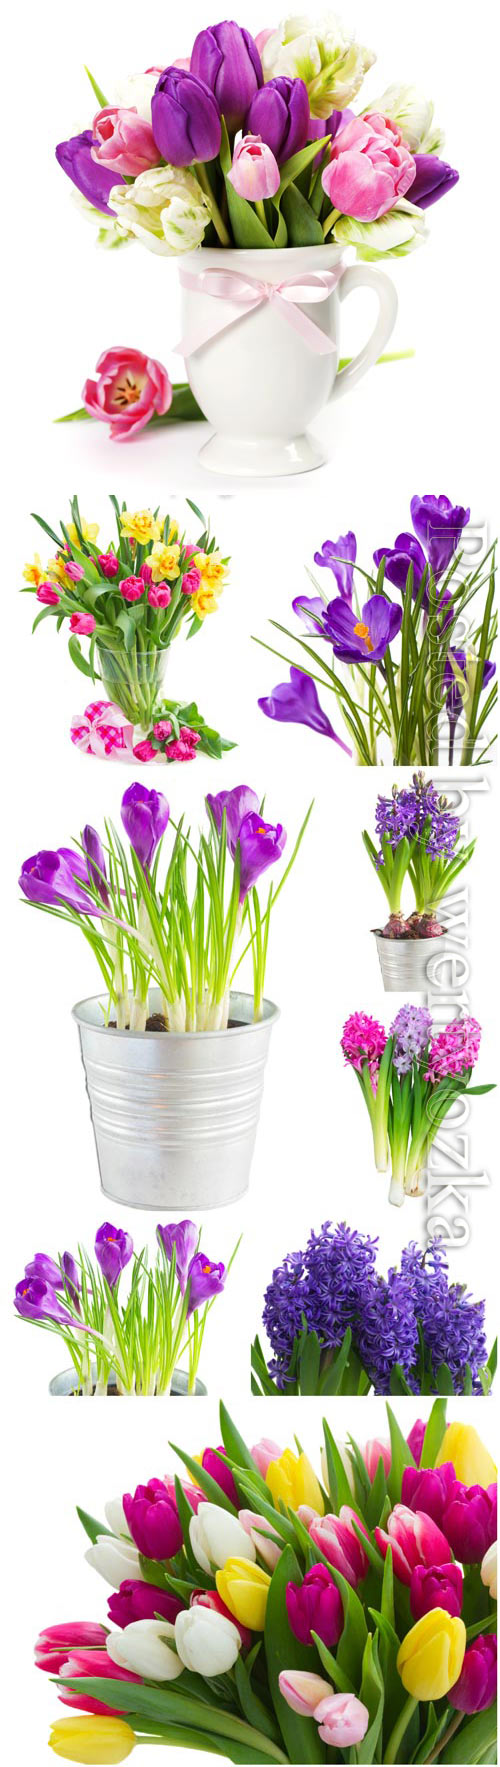 Hyacinths, crocuses and tulips stock photo